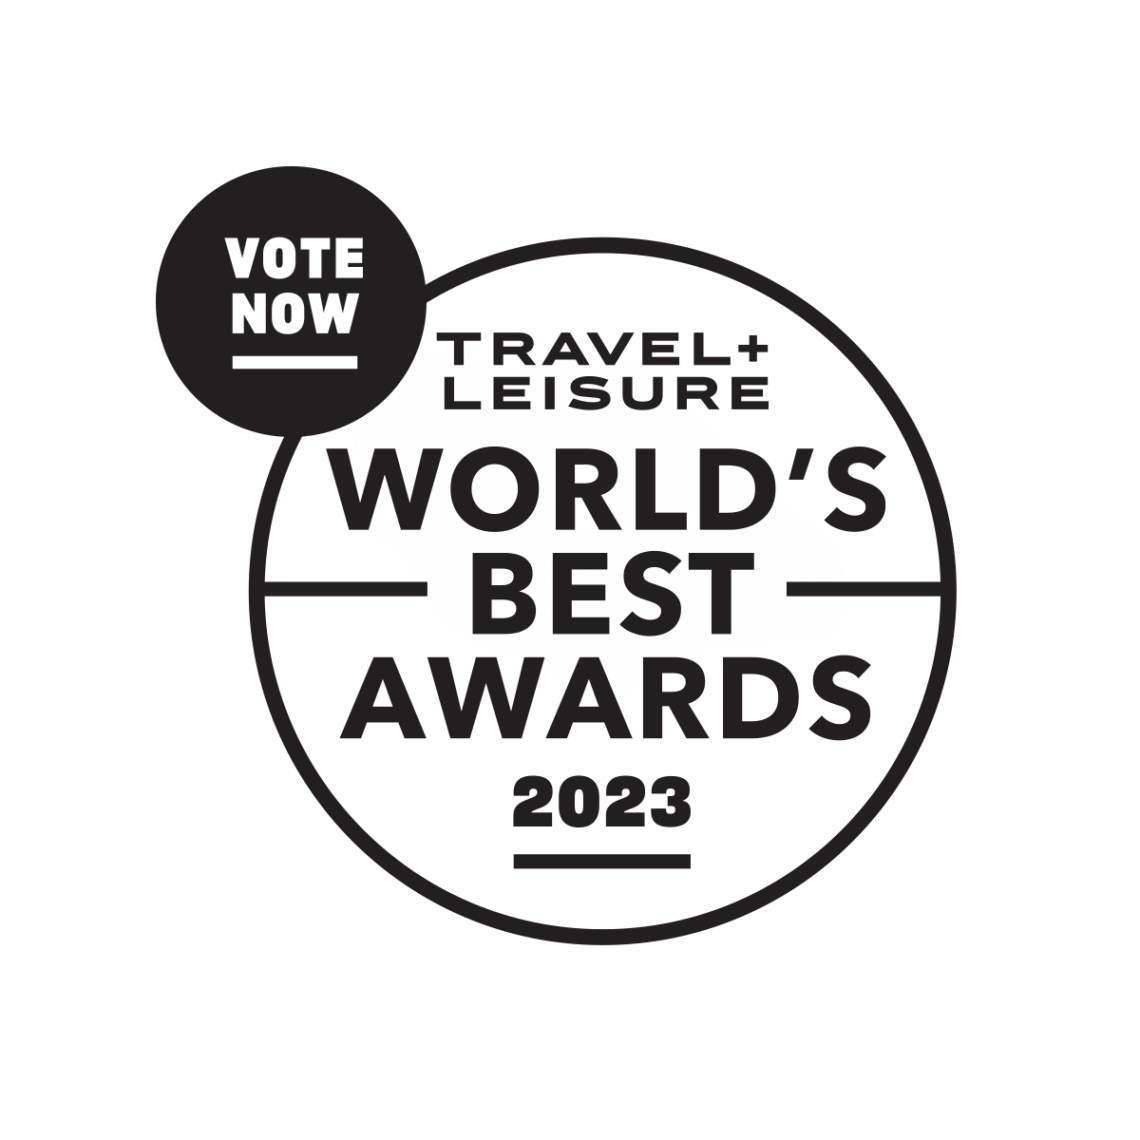 Travel + Leisure World's Best Awards 2023 - The Kartrite